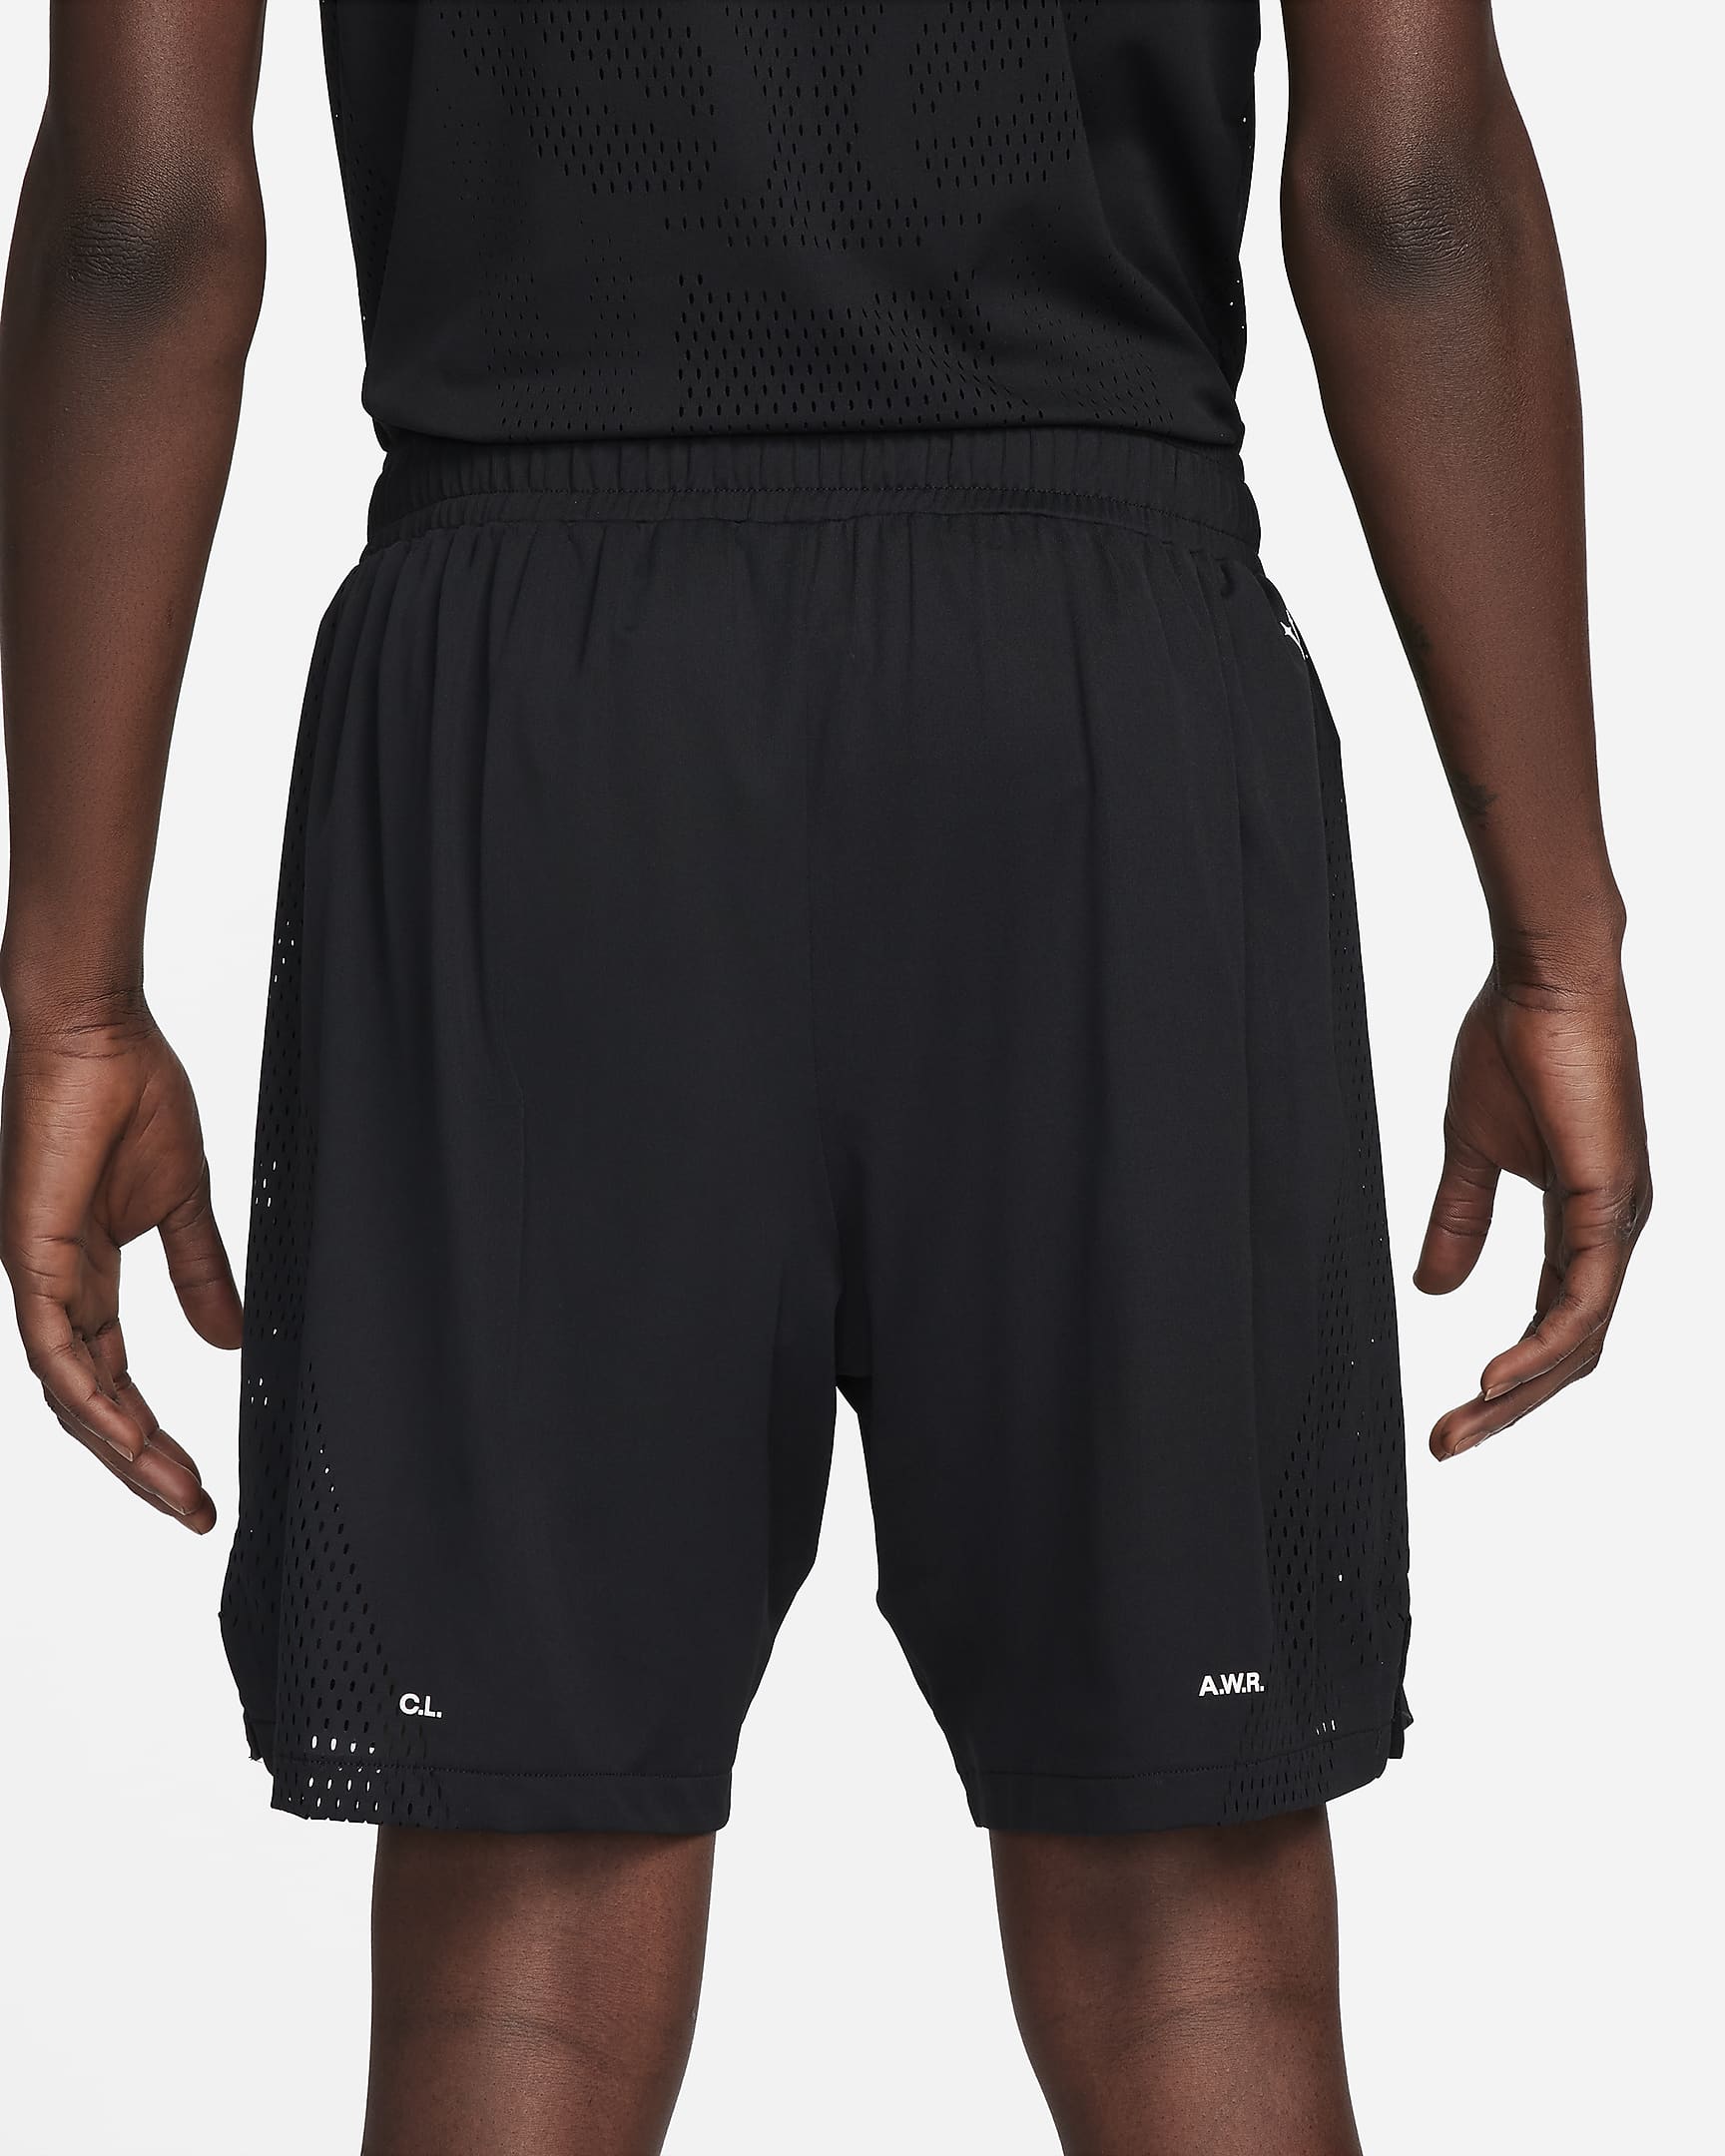 NOCTA Men's Dri-FIT Shorts - Black/White